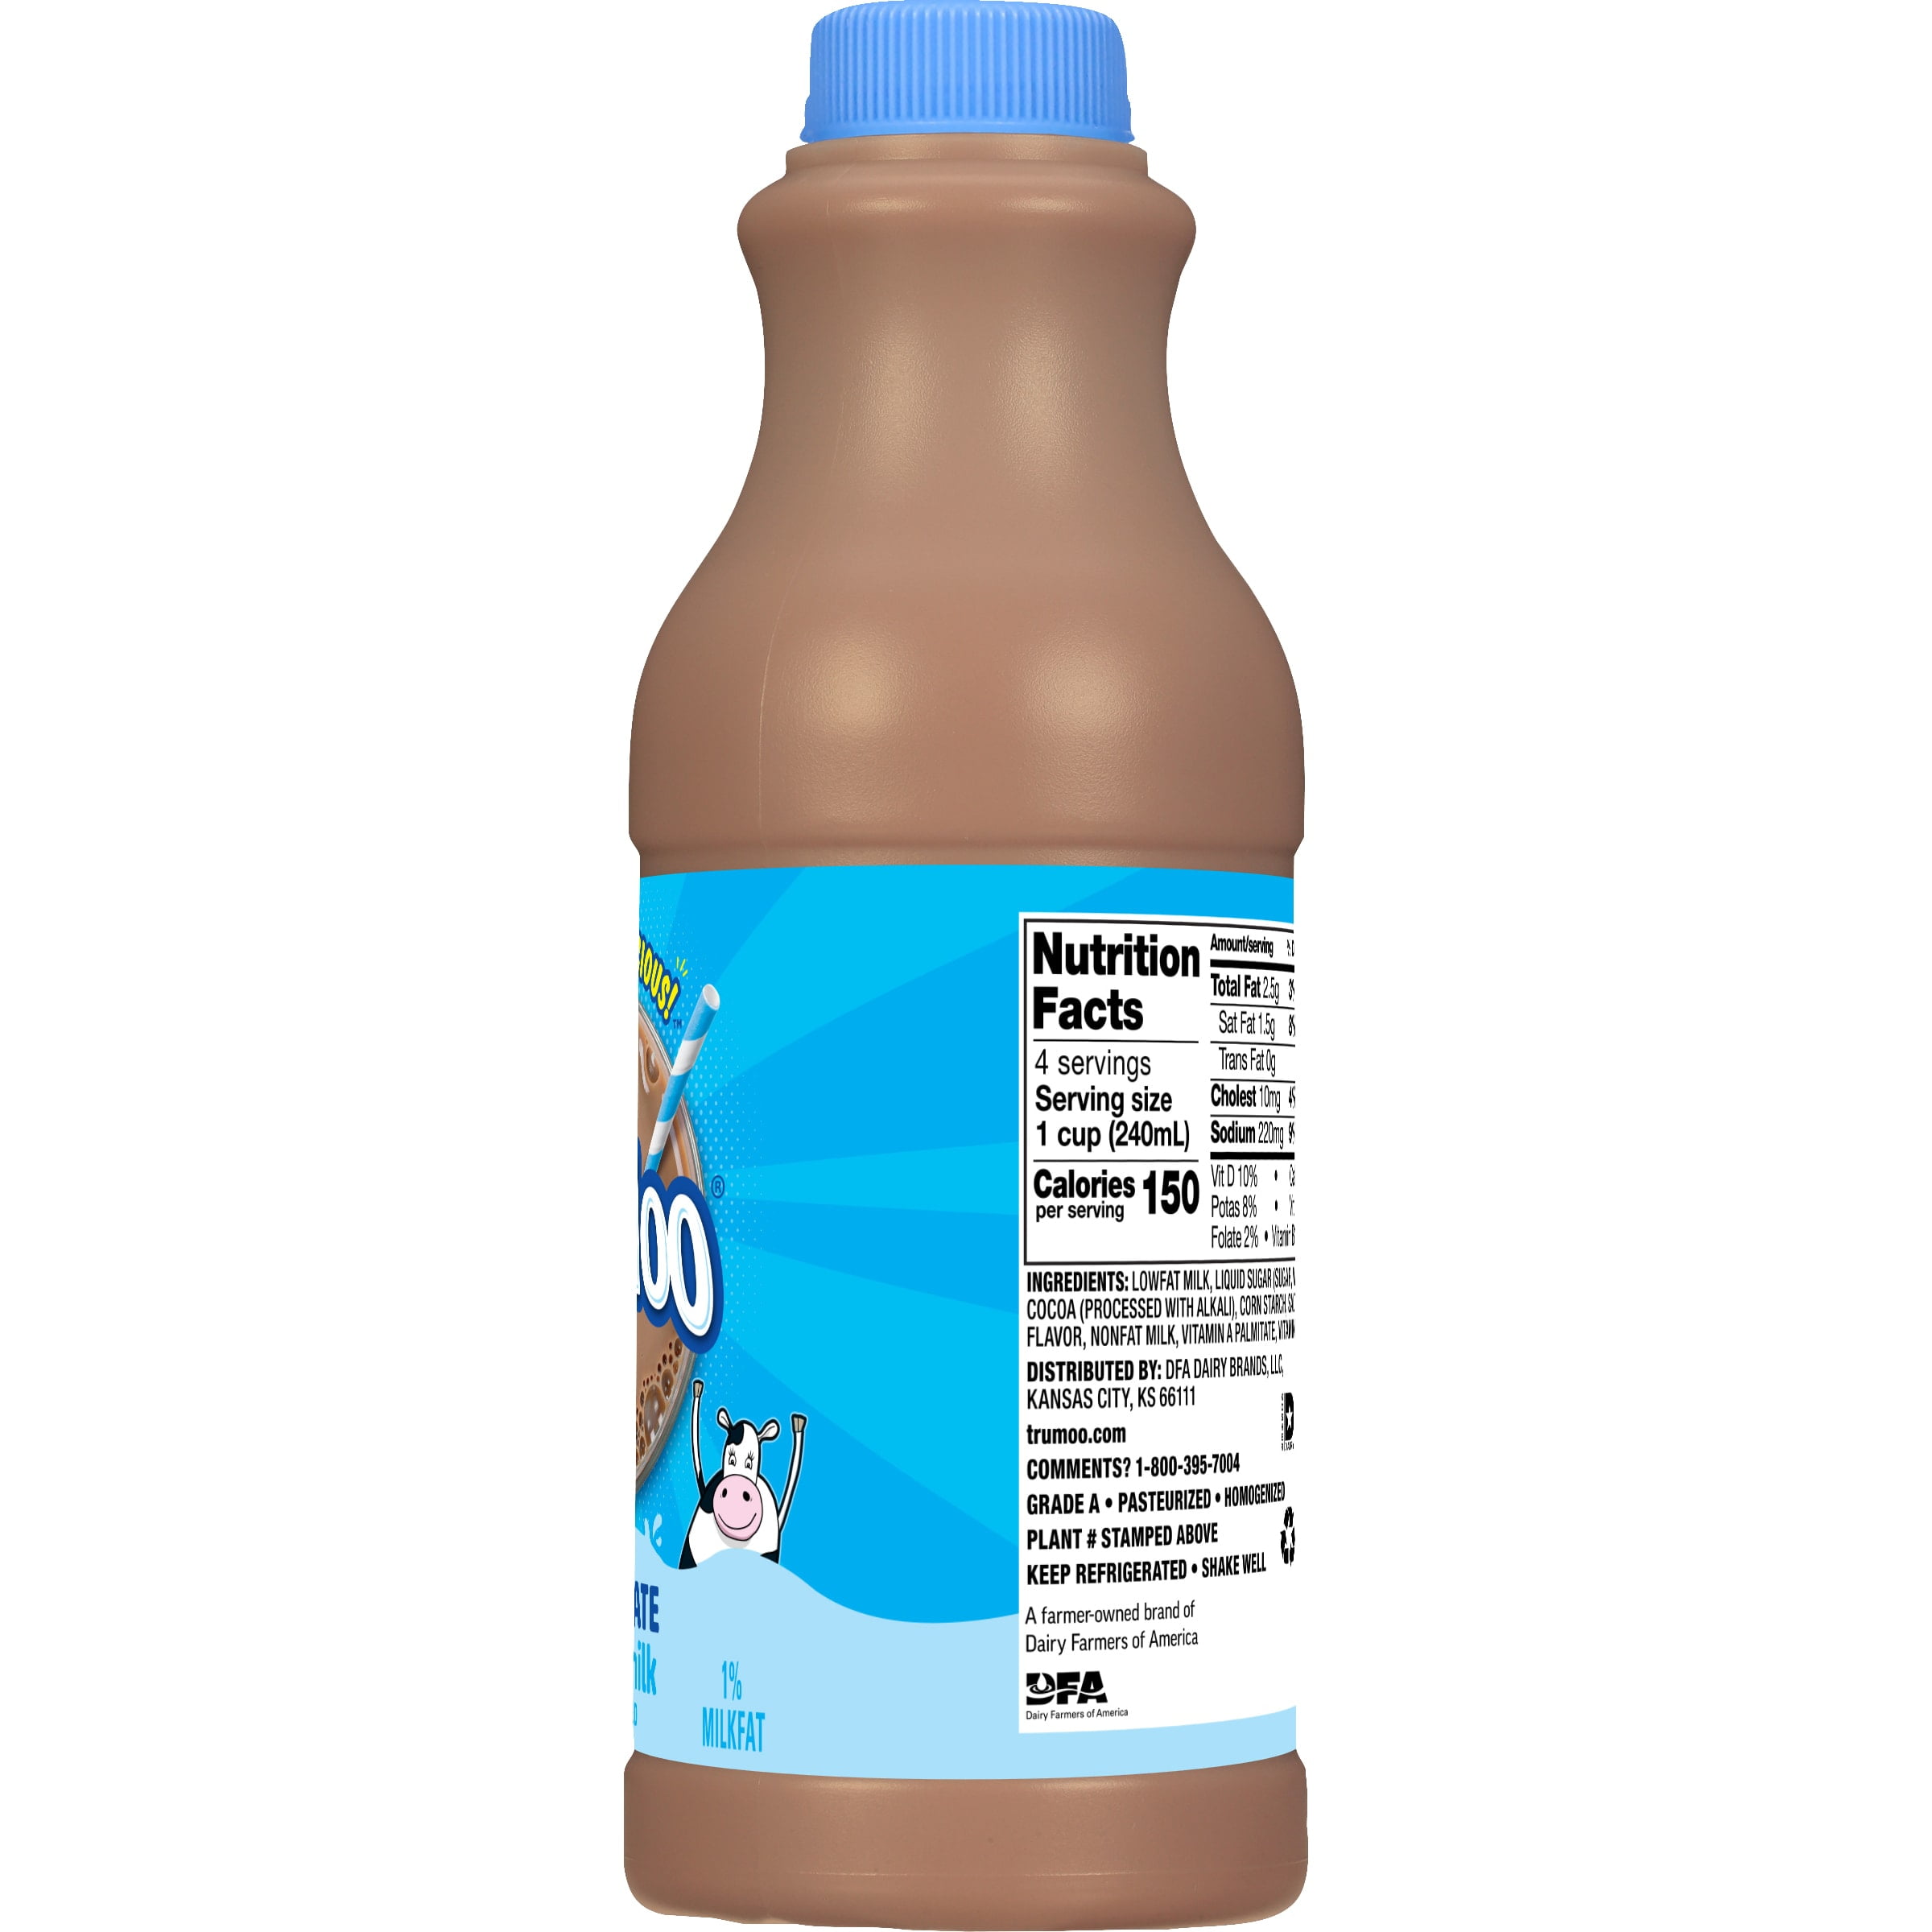 TruMoo Chocolate 1% Lowfat Milk Quart 